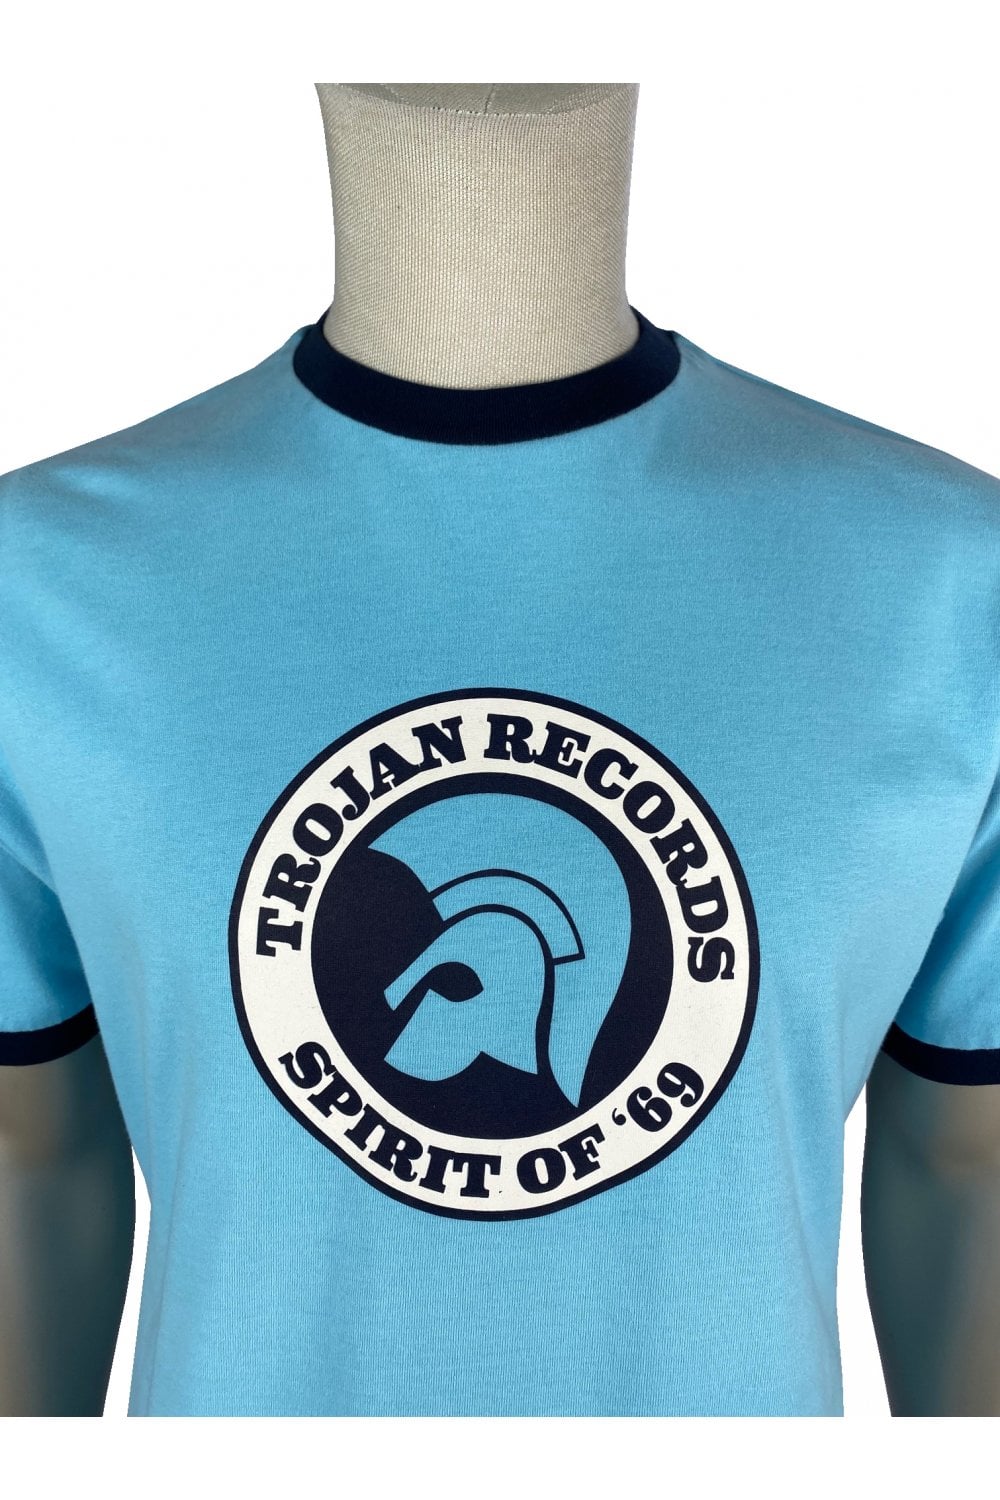 Trojan Records Men's TC1006 Spirit Of '69 Logo Tee Shirt Mint